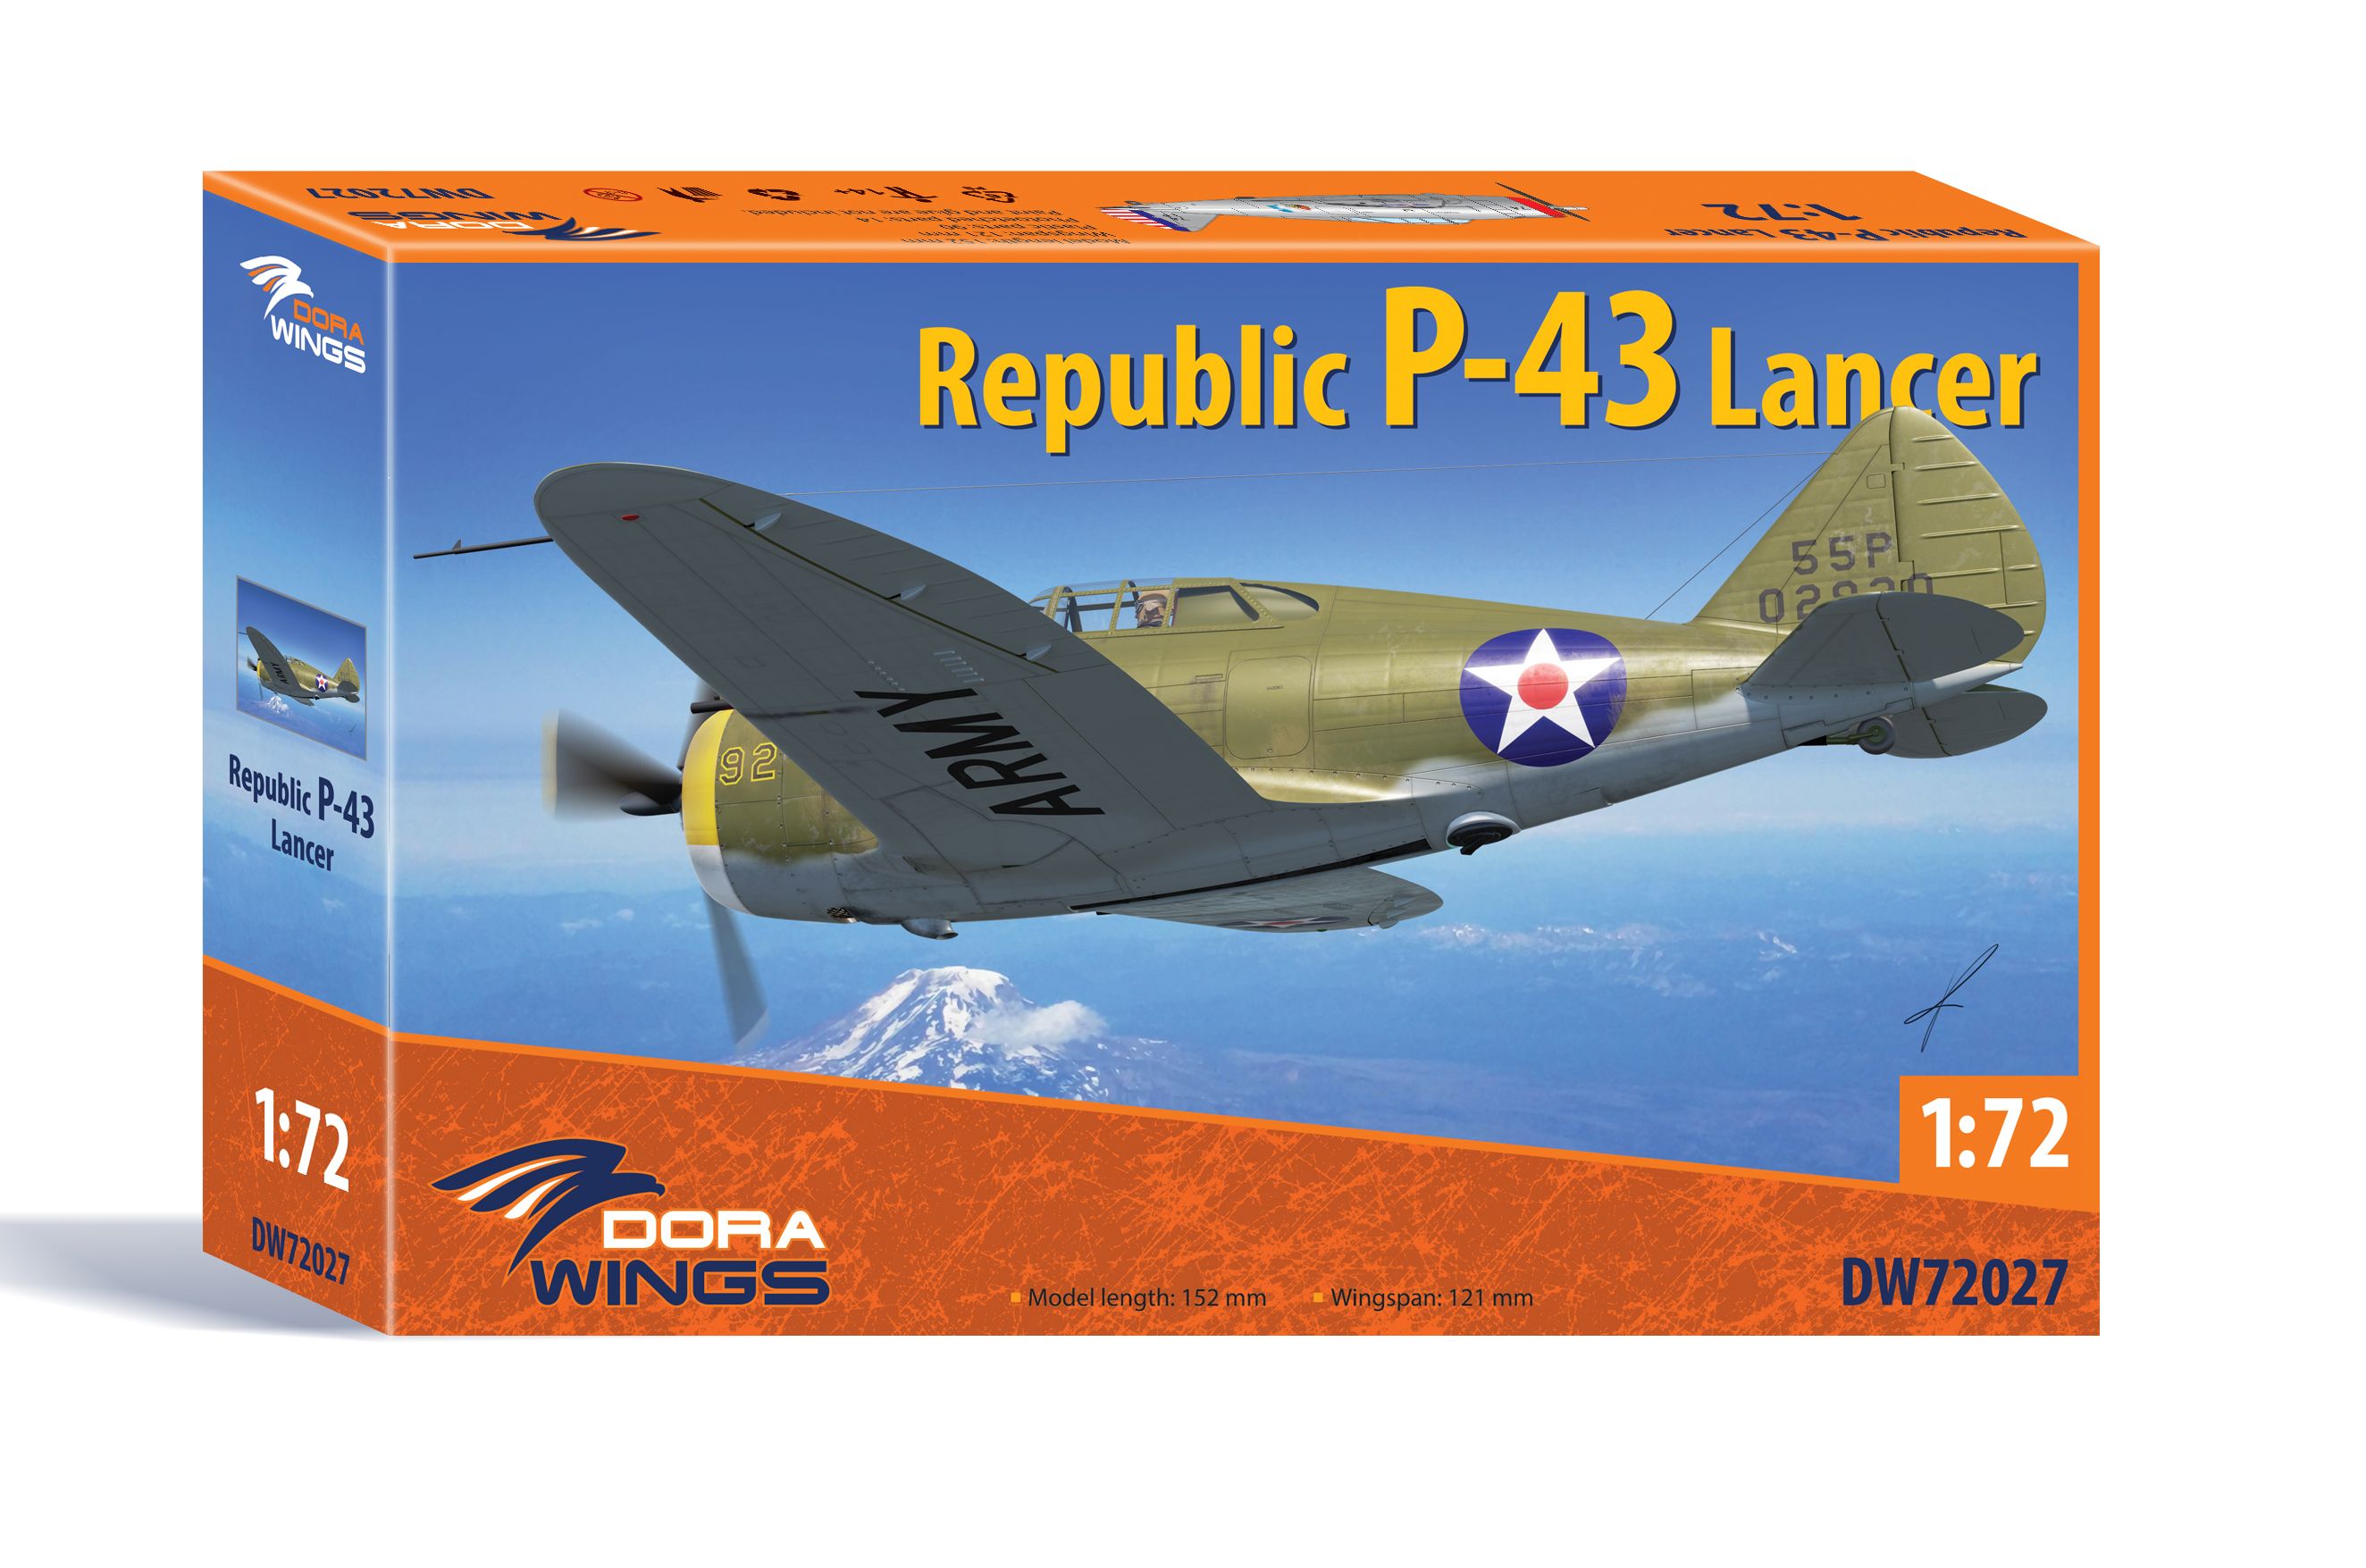 DW72027 Republic P-43 lancer